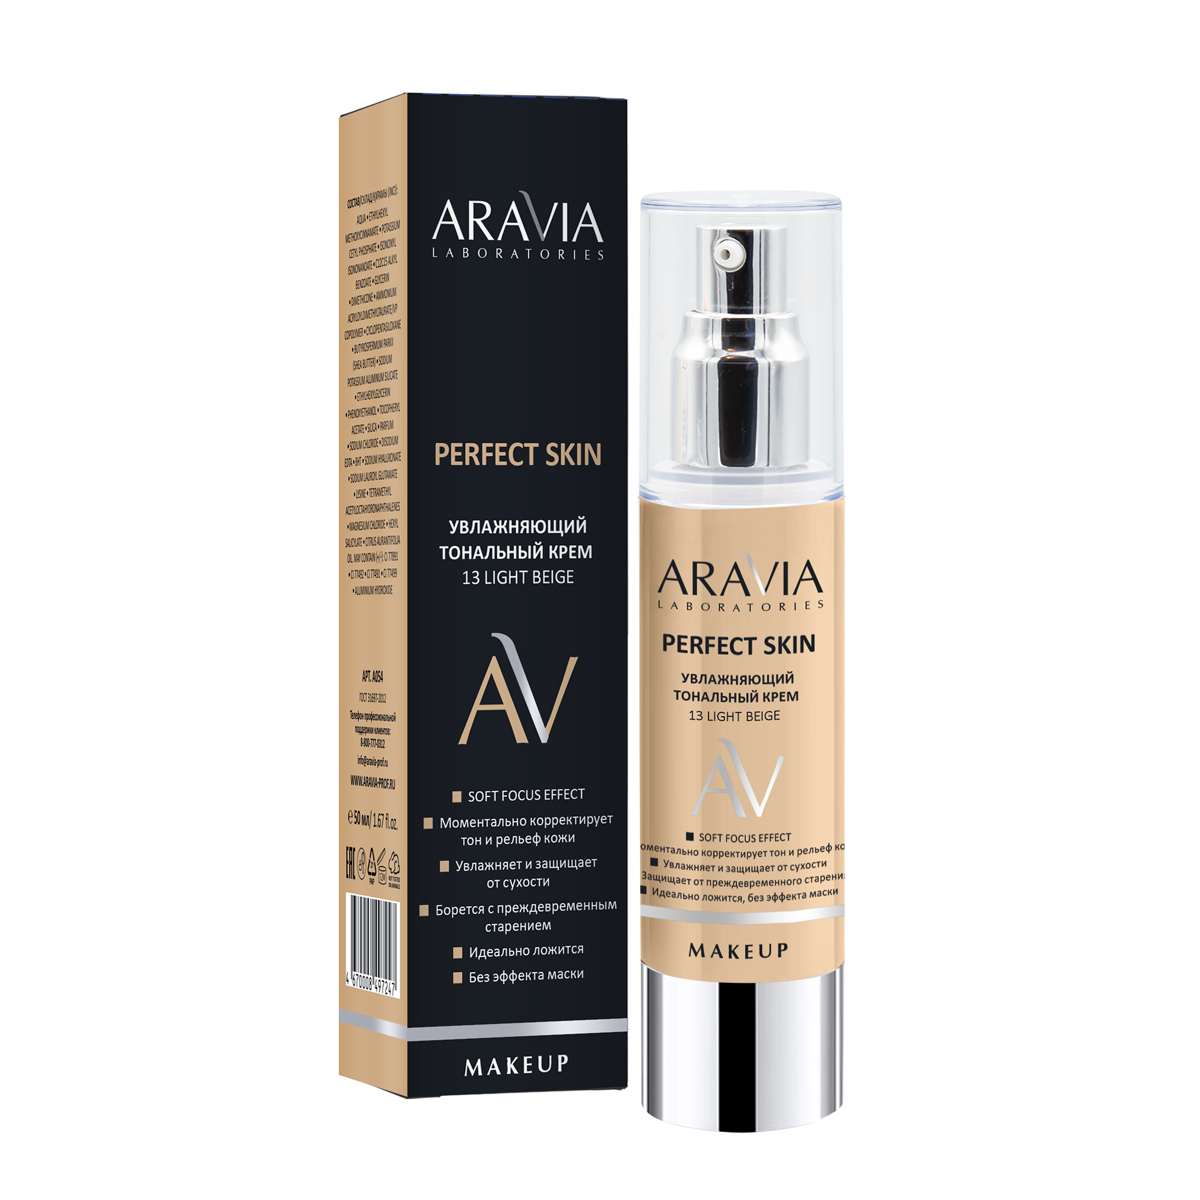 Aravia Laboratories Увлажняющий тональный крем Perfect Skin 13 Light Beige, 50 мл (Aravia Laboratories, Уход за лицом) от Pharmacosmetica.ru